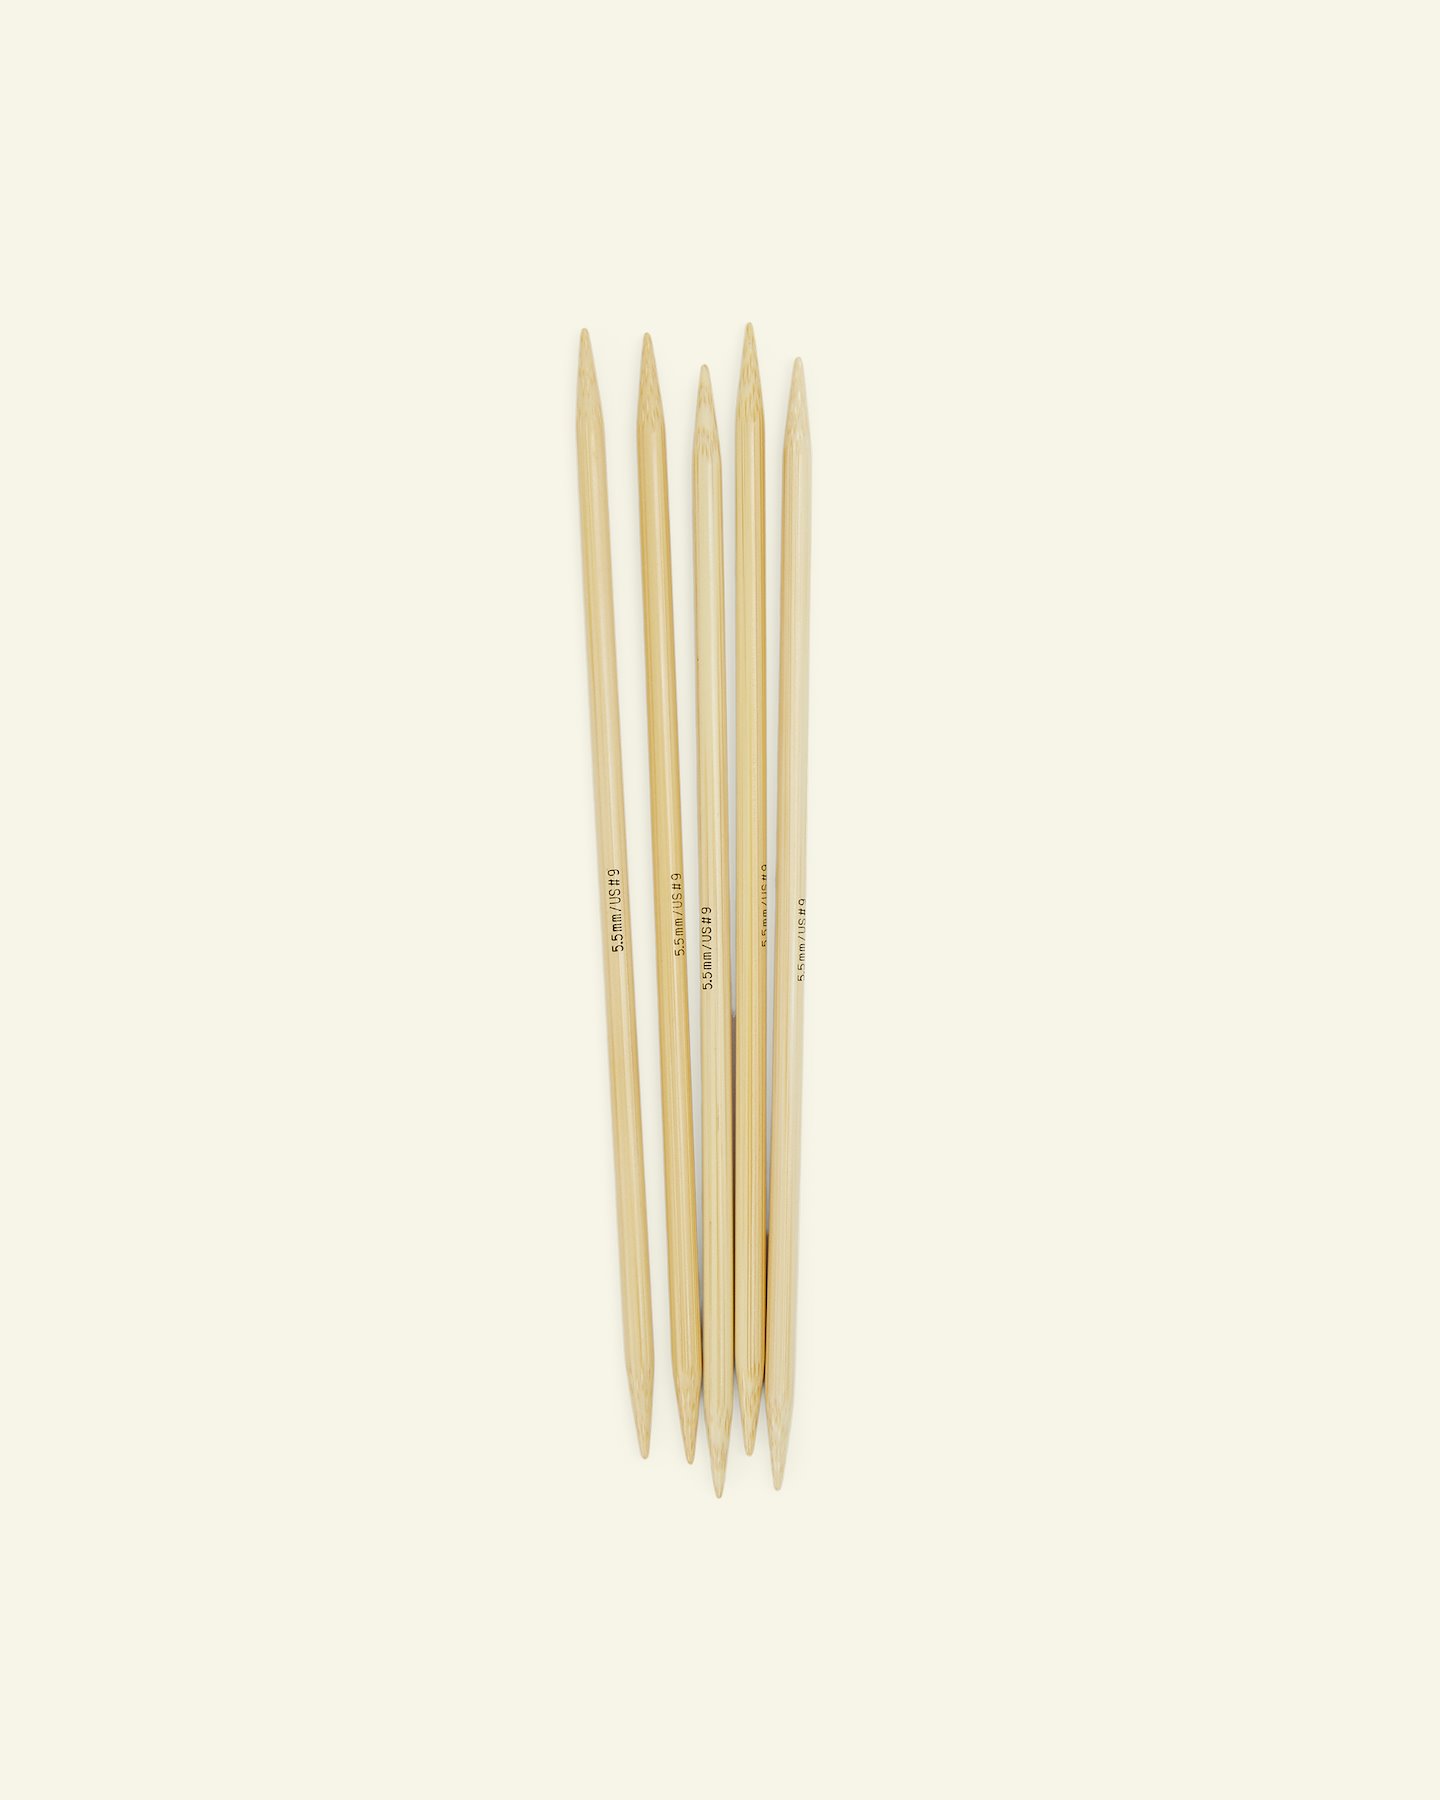 Addi strømpepinde bambus 20cm 5,5mm 83279_pack